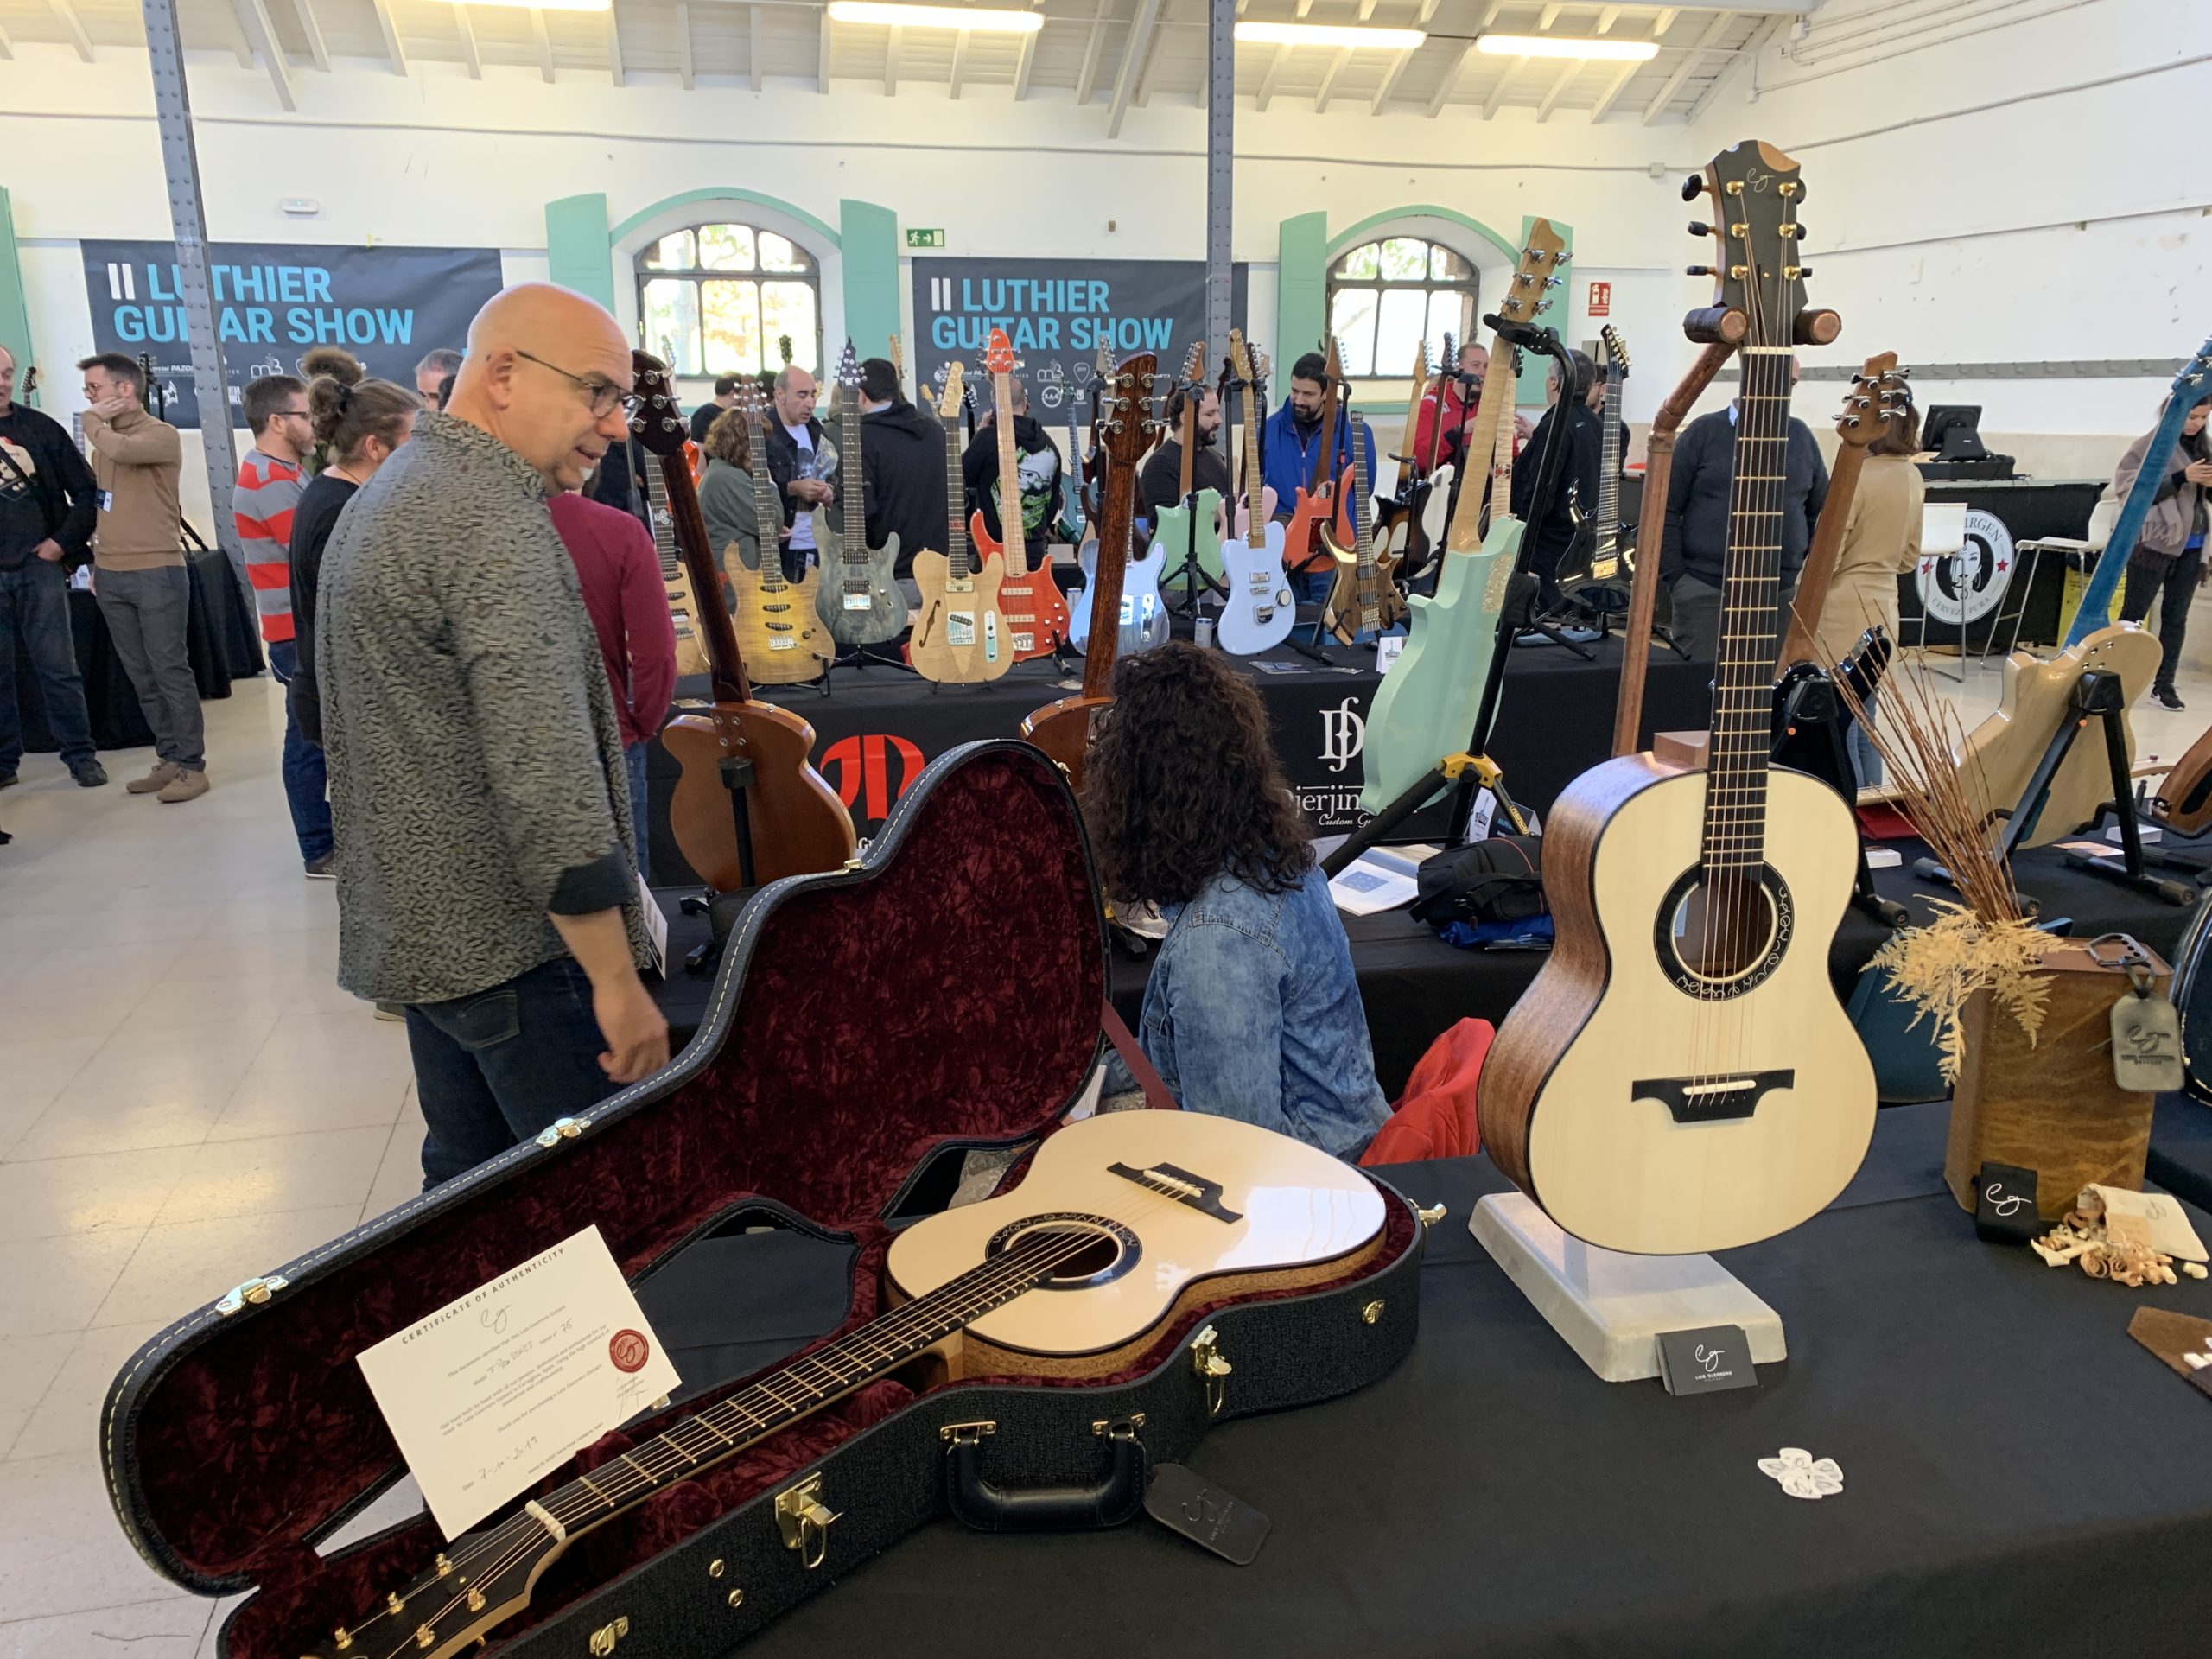 Luis Guerrero luthier interview, acoustic guitar builder - Madrid Luthier Guitar Show 2019